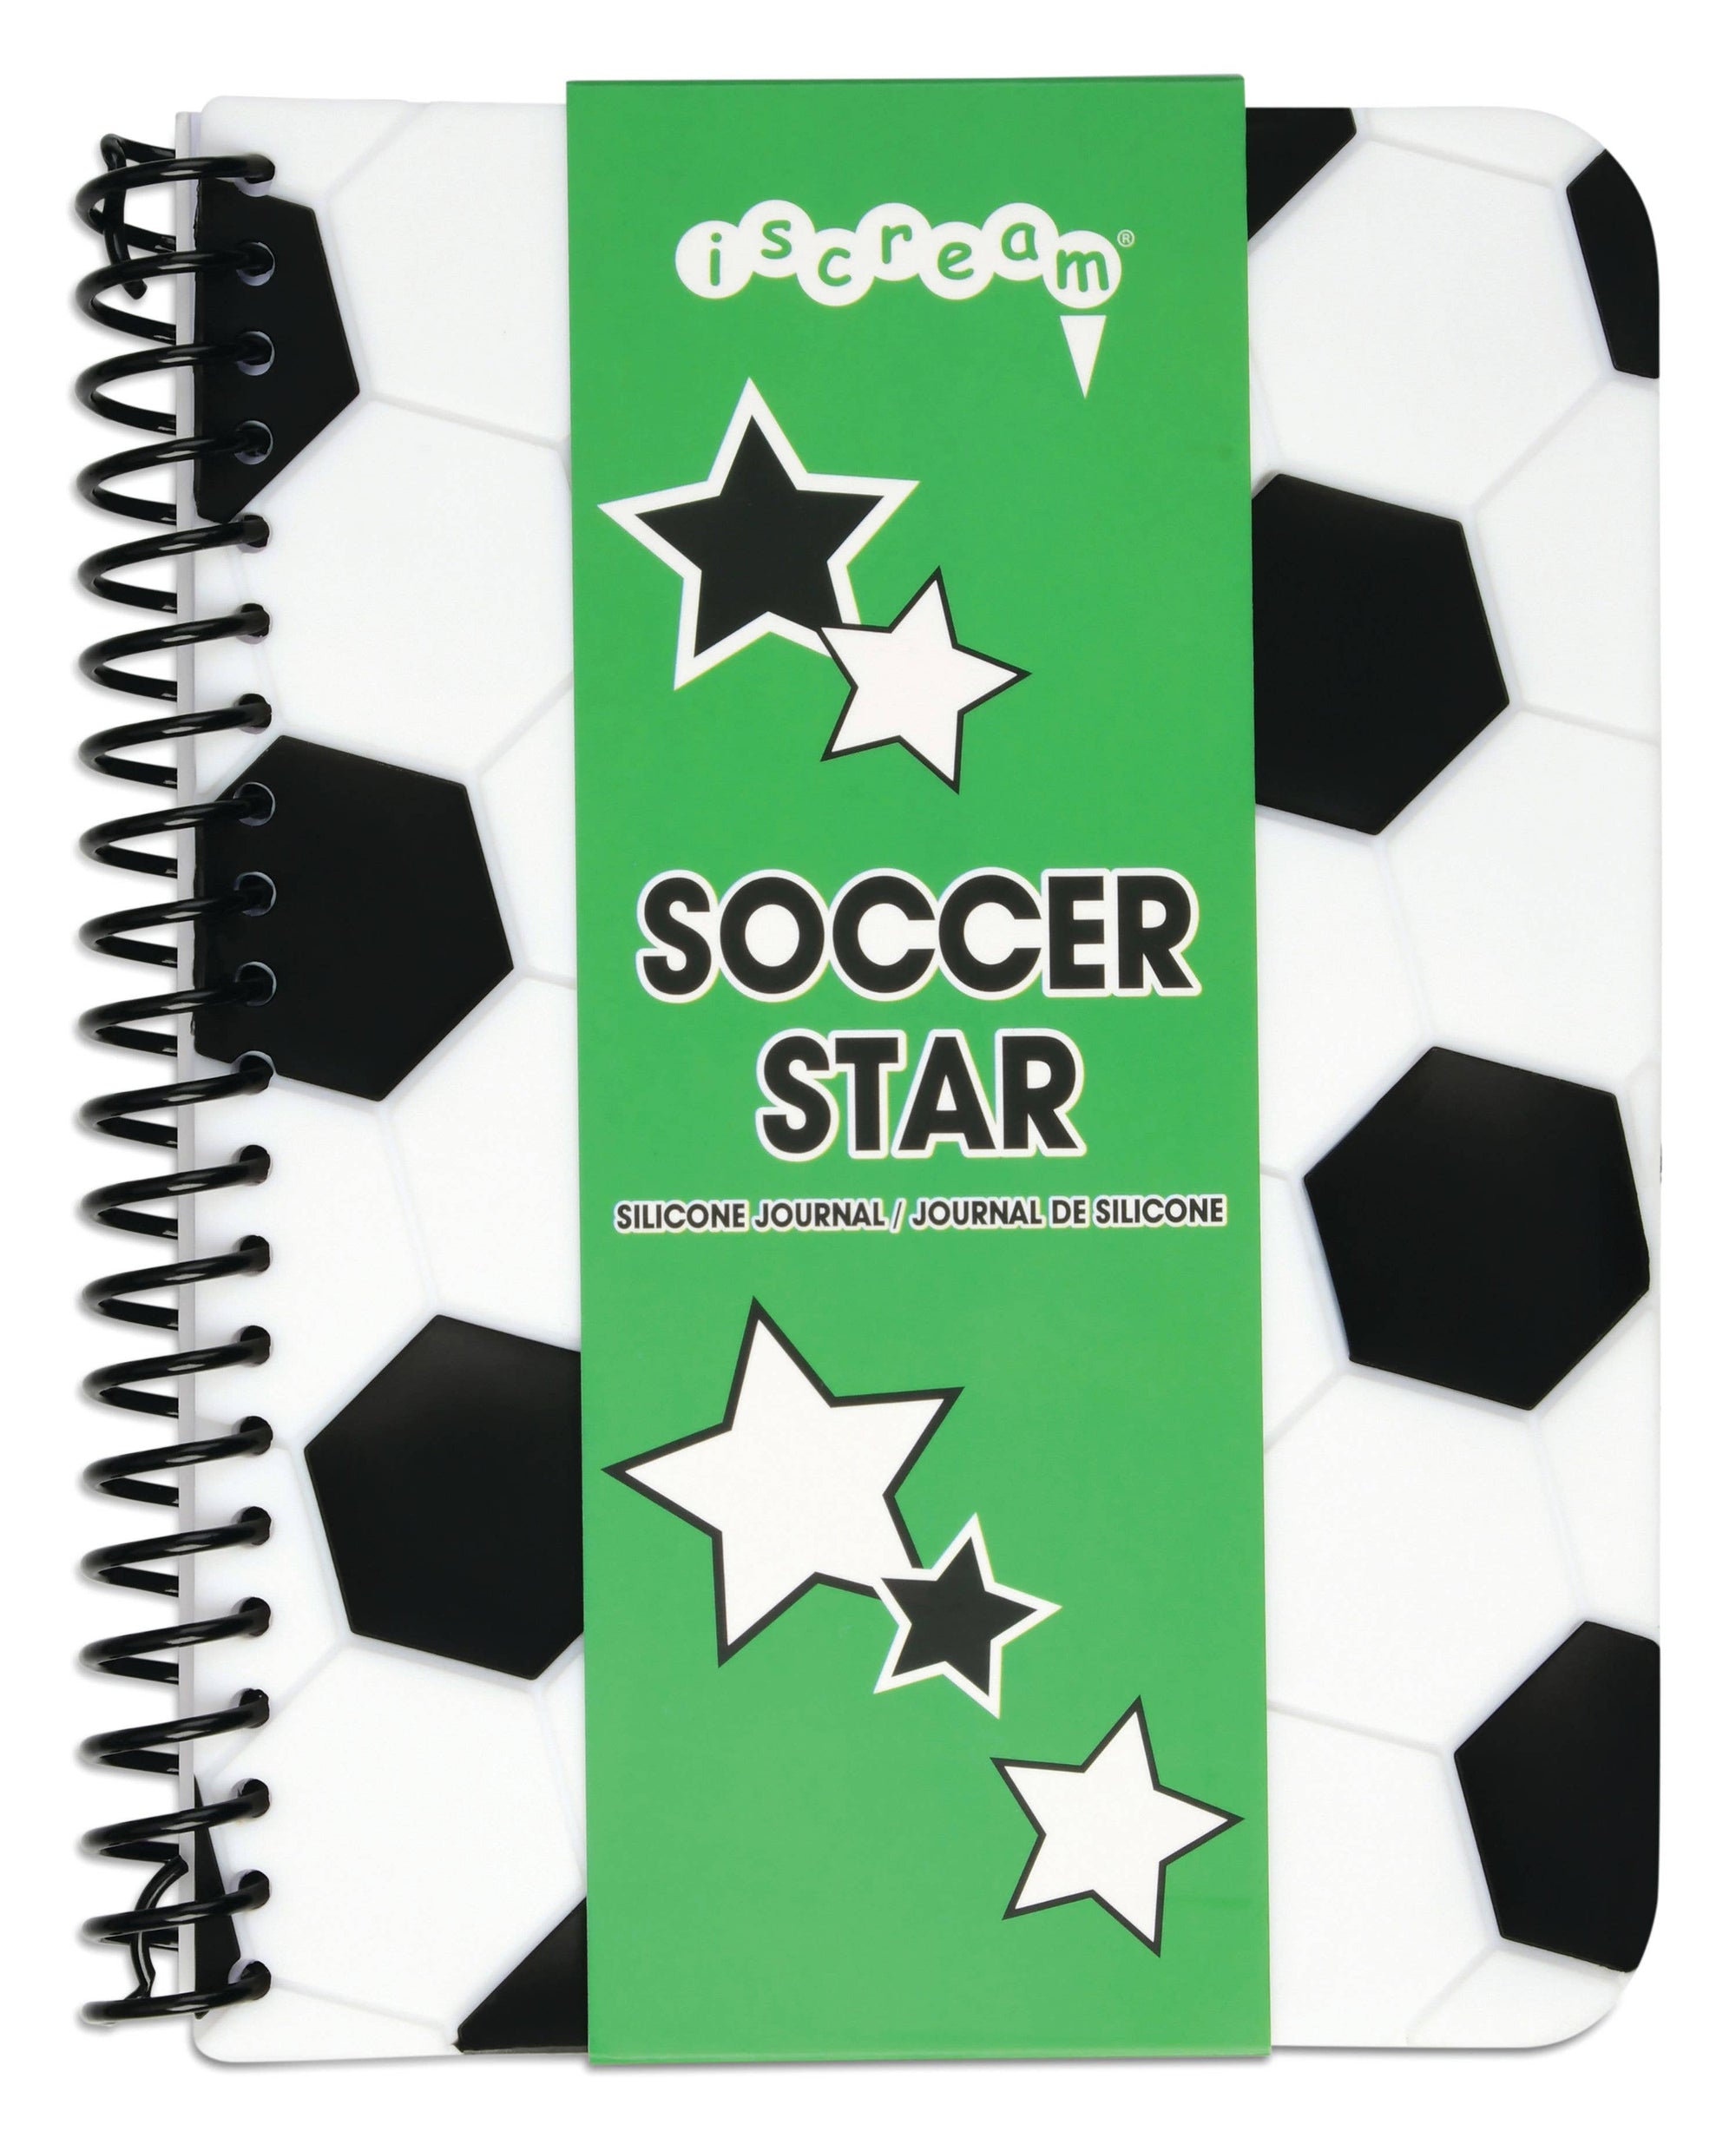 Iscream Soccer Stars Silicone Journal